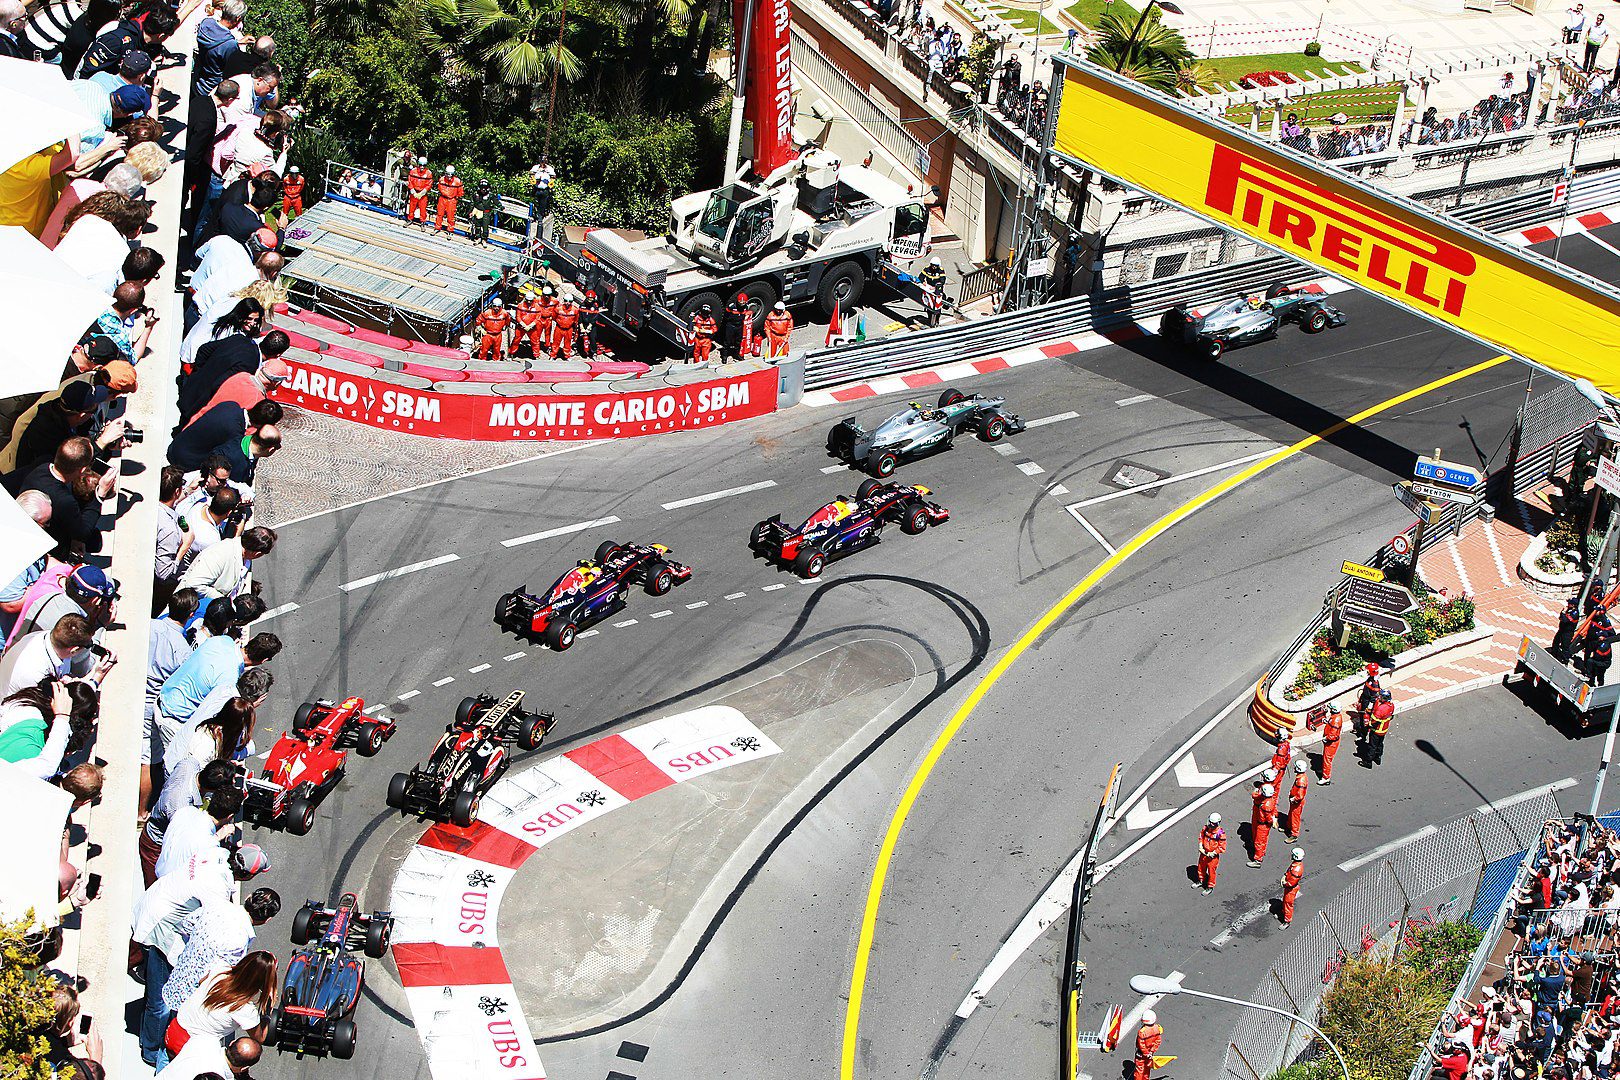 10 Interesting Facts About the Monaco Grand Prix